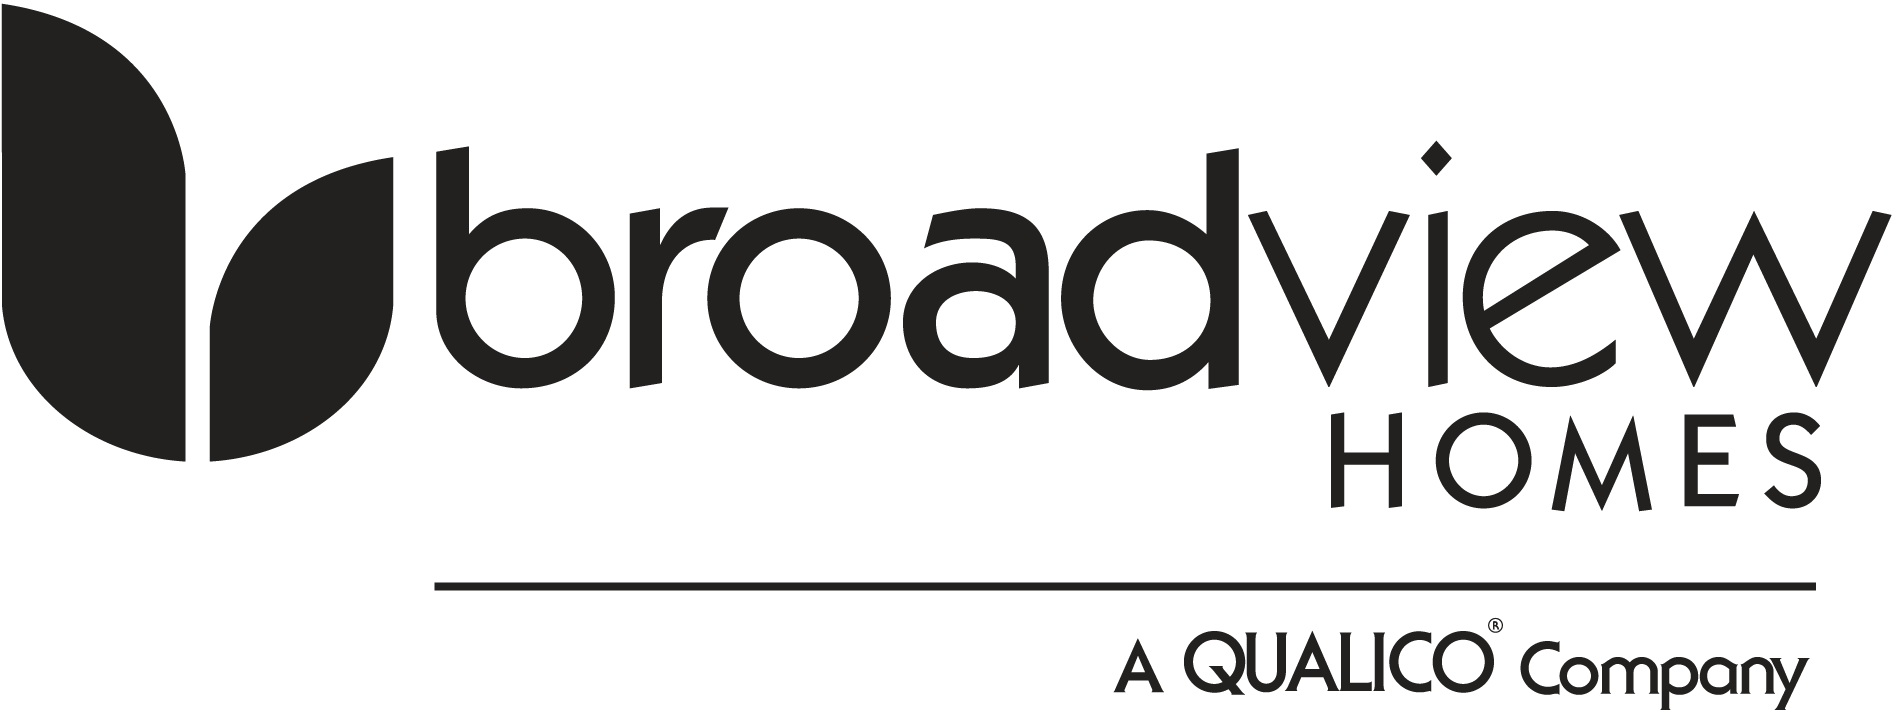 Broadview Homes - A Qualico Company